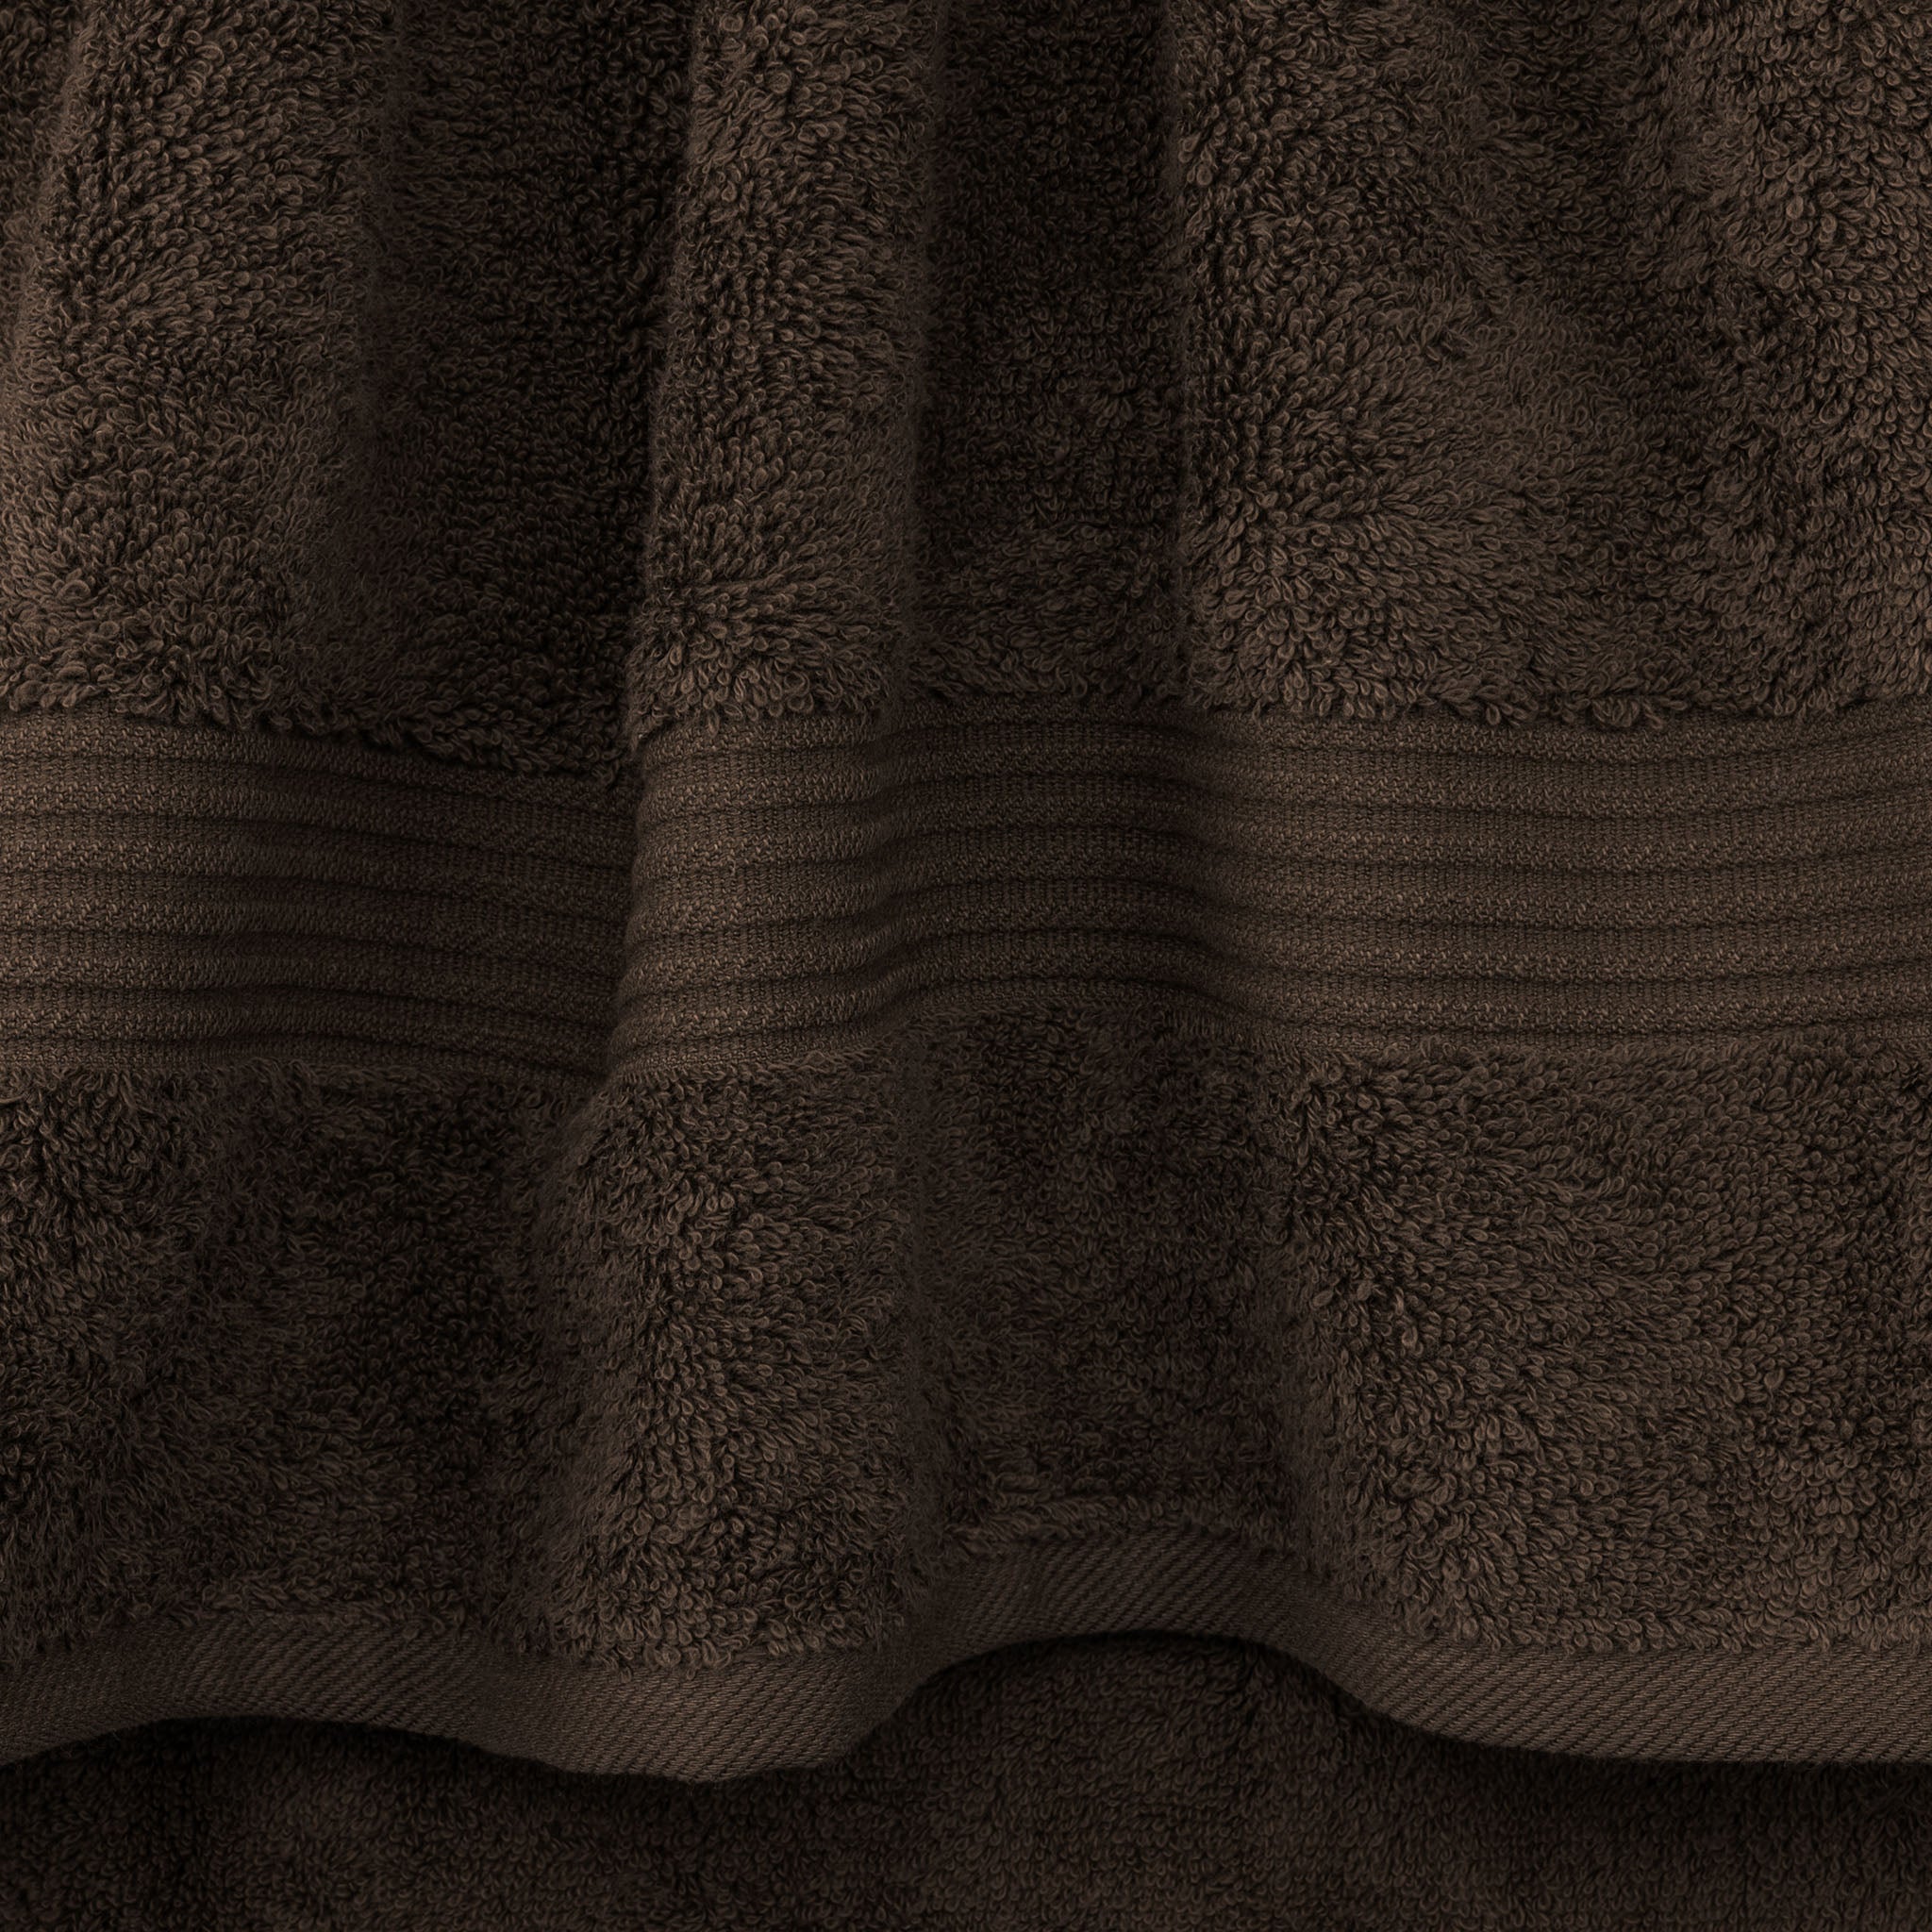 American Soft Linen Bekos 100% Cotton Turkish Towels, 4 Piece Bath Towel Set -chocolate-brown-03